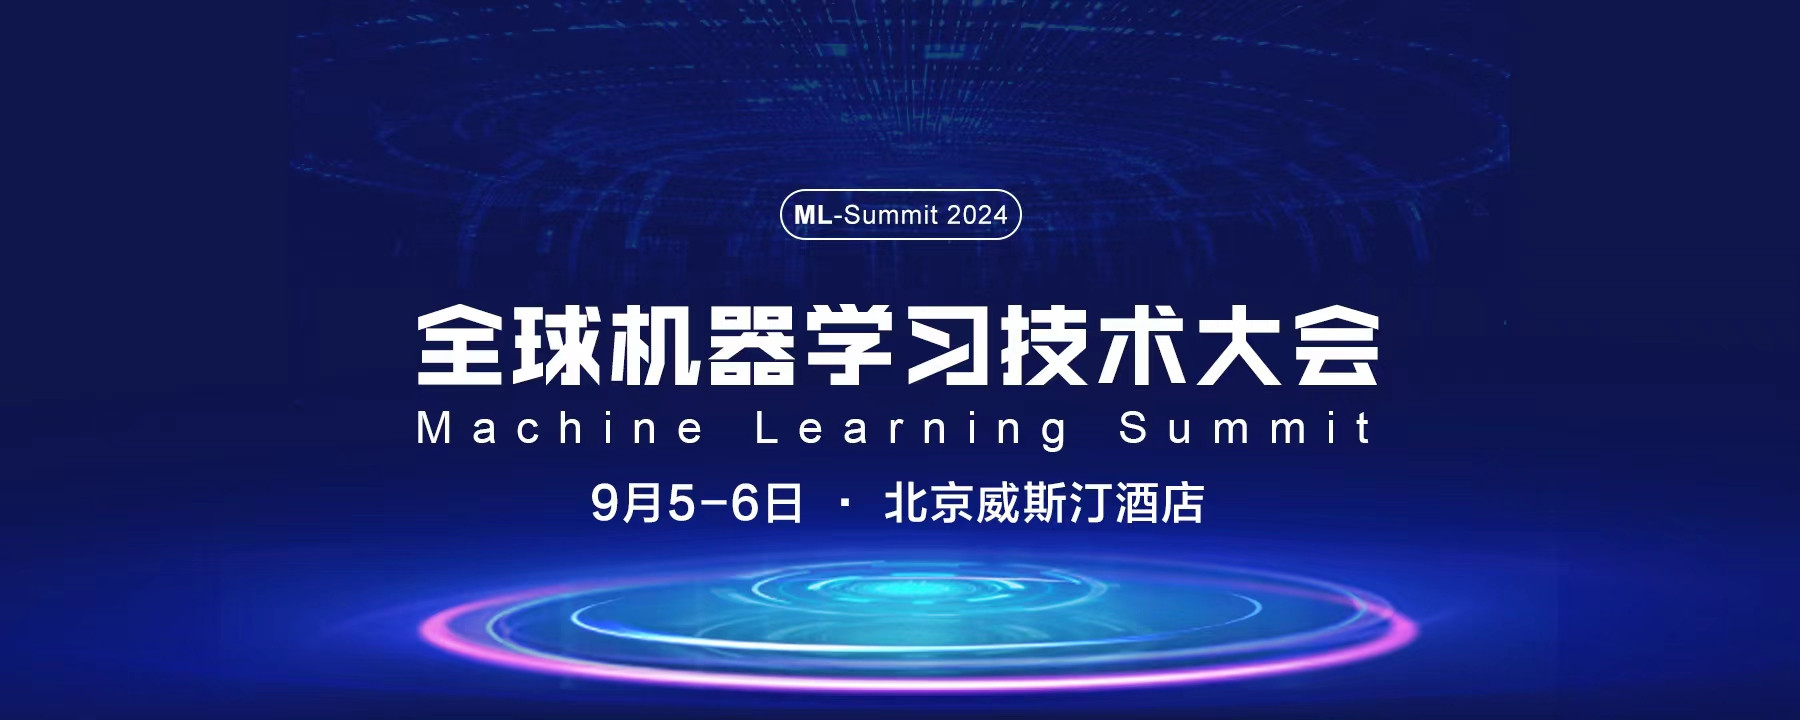 MLSummit北京2024机器学习大会